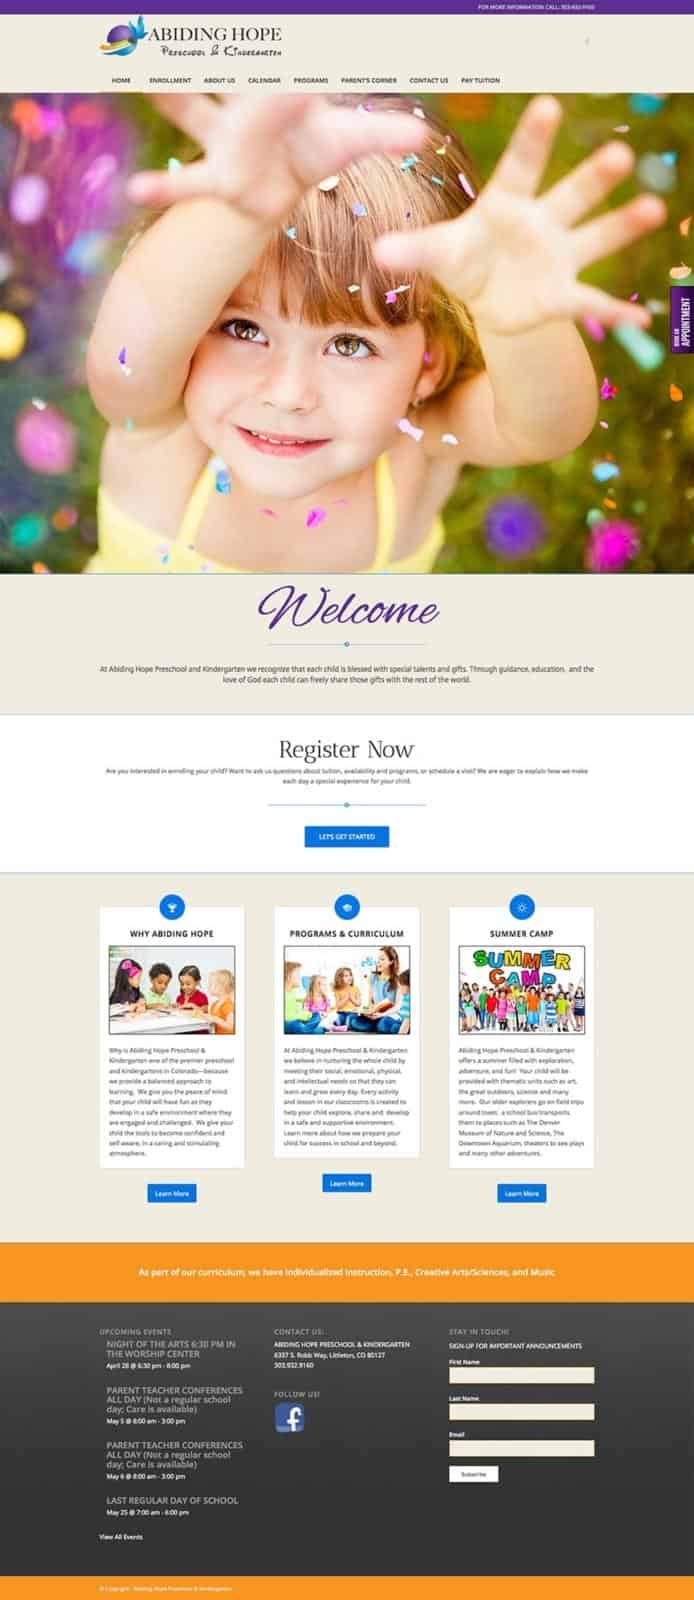 WOW Factor Digital Marketing Agency - Abiding Hope Preschool Website